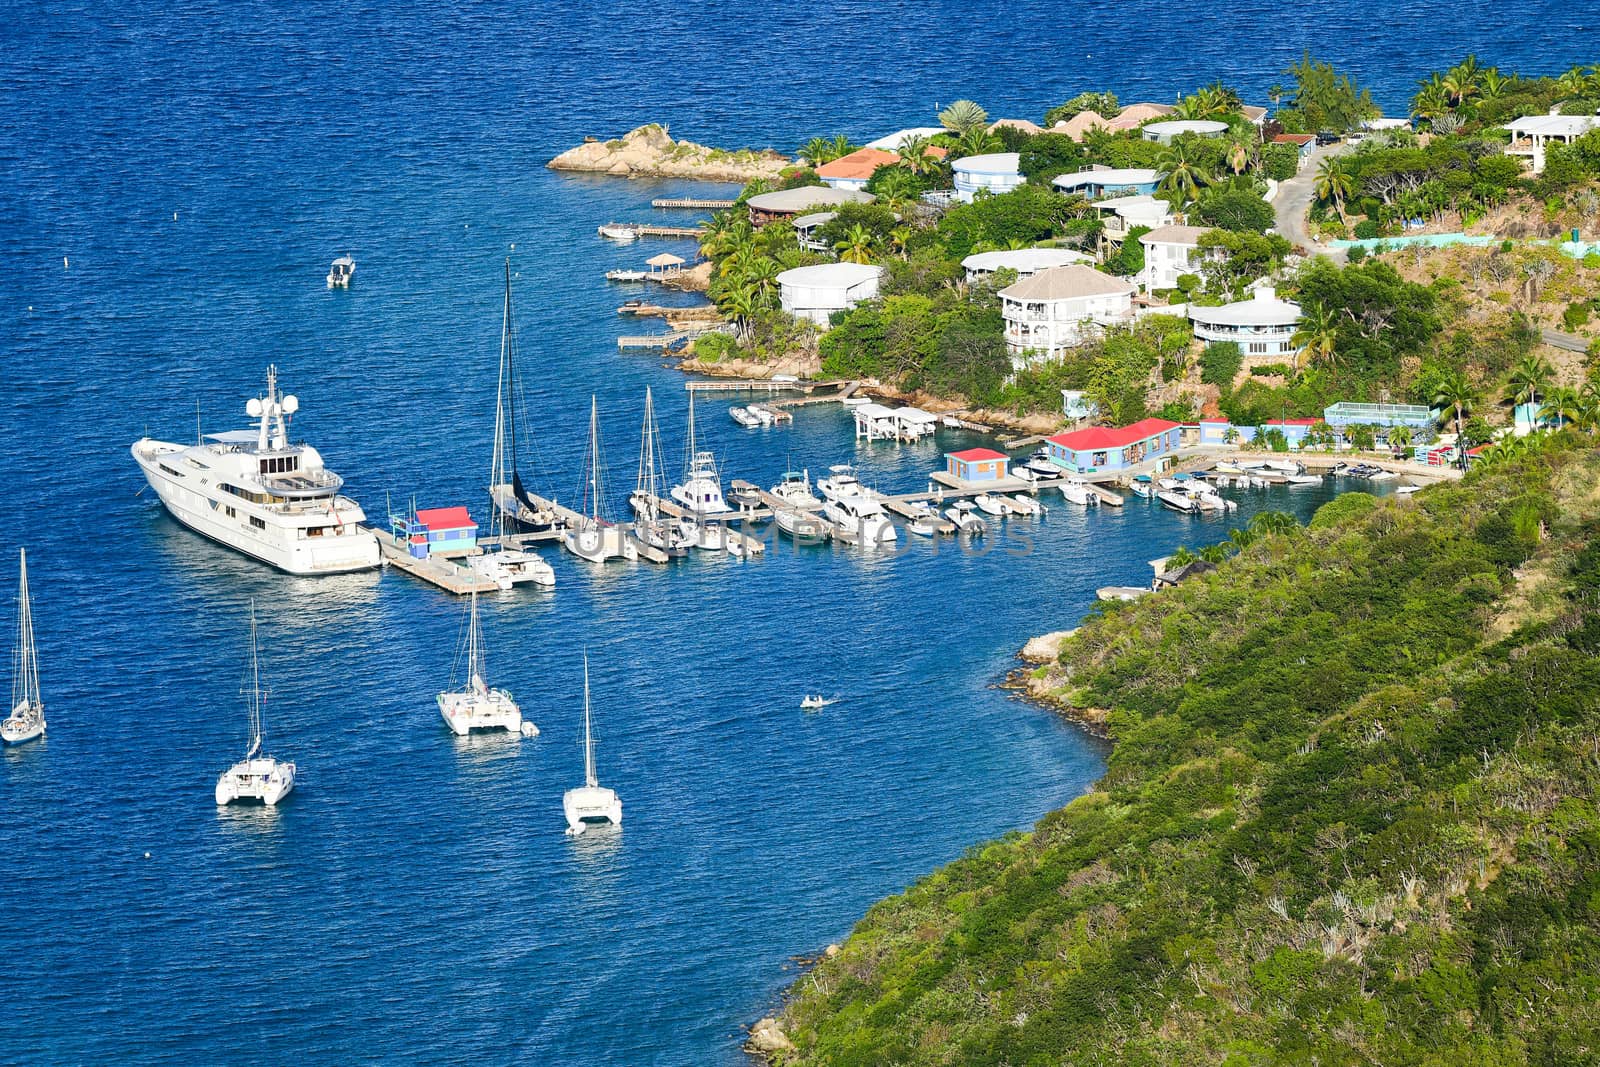 Yachts at moorings and docks in small British Virgin Islands Harbot